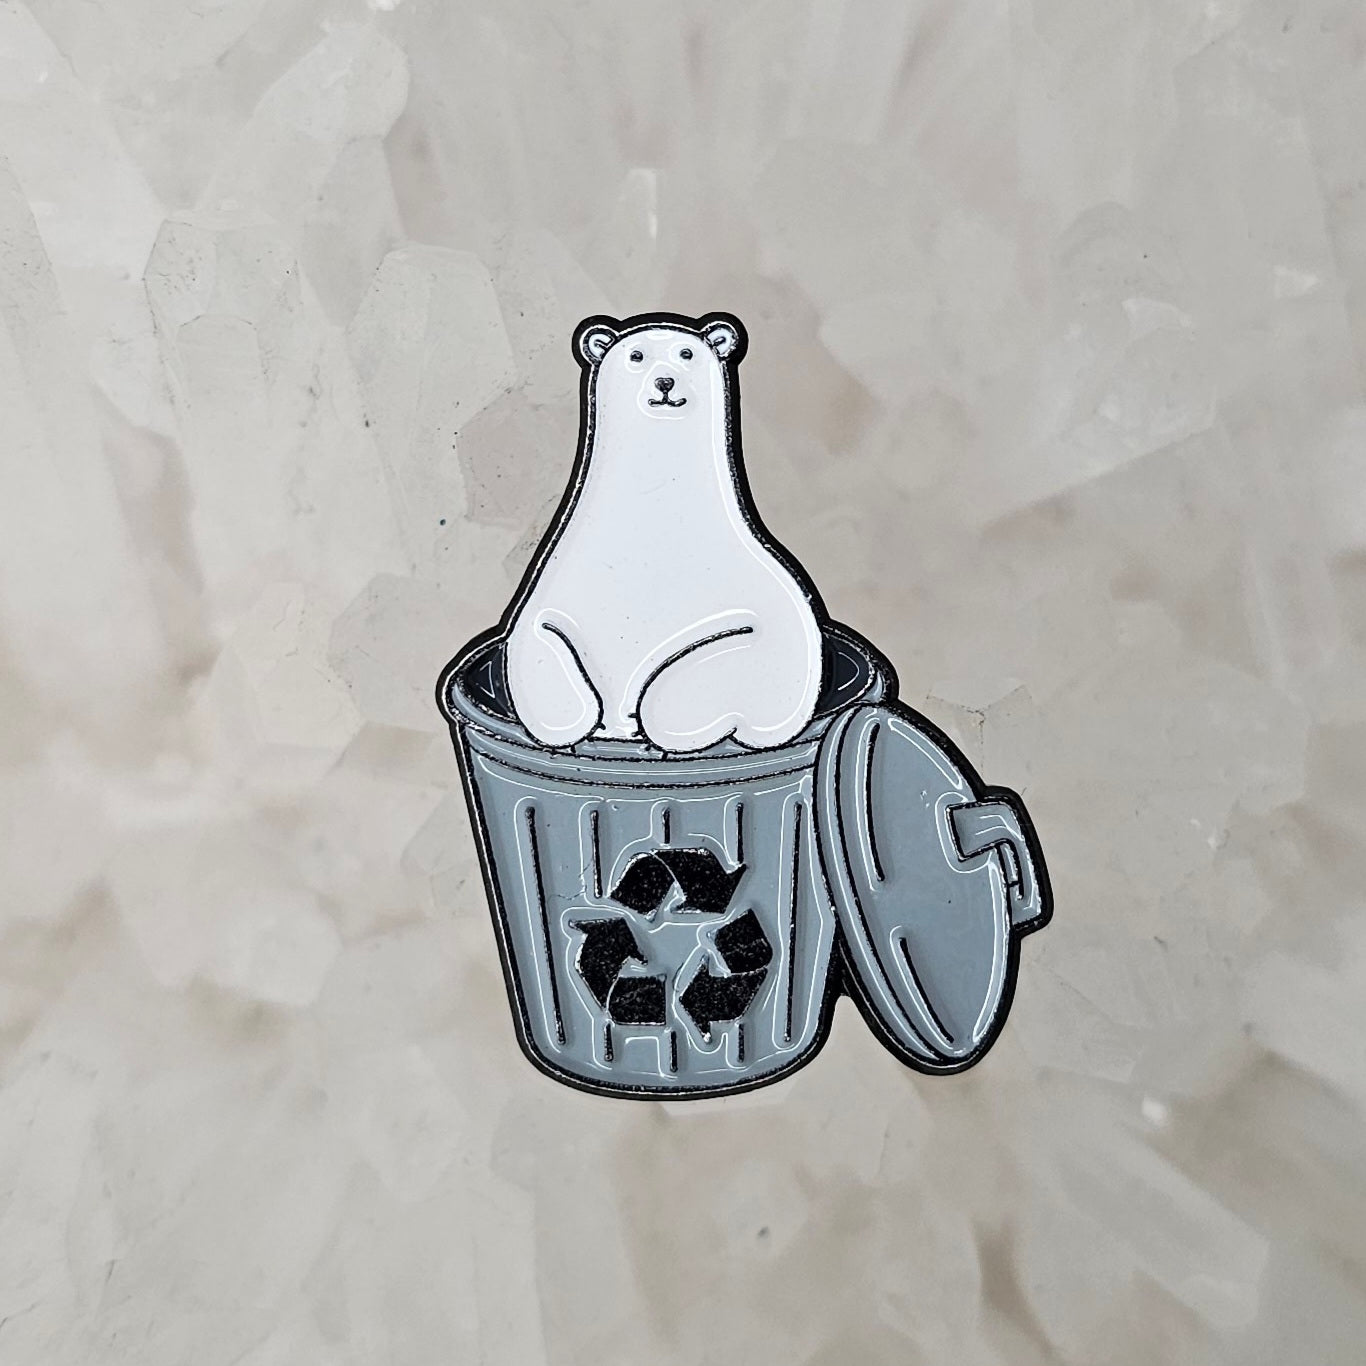 Reduce Reuse Recycle Polar Bear Trash Can Enamel Pins Hat Pins Lapel Pin Brooch Badge Festival Pin